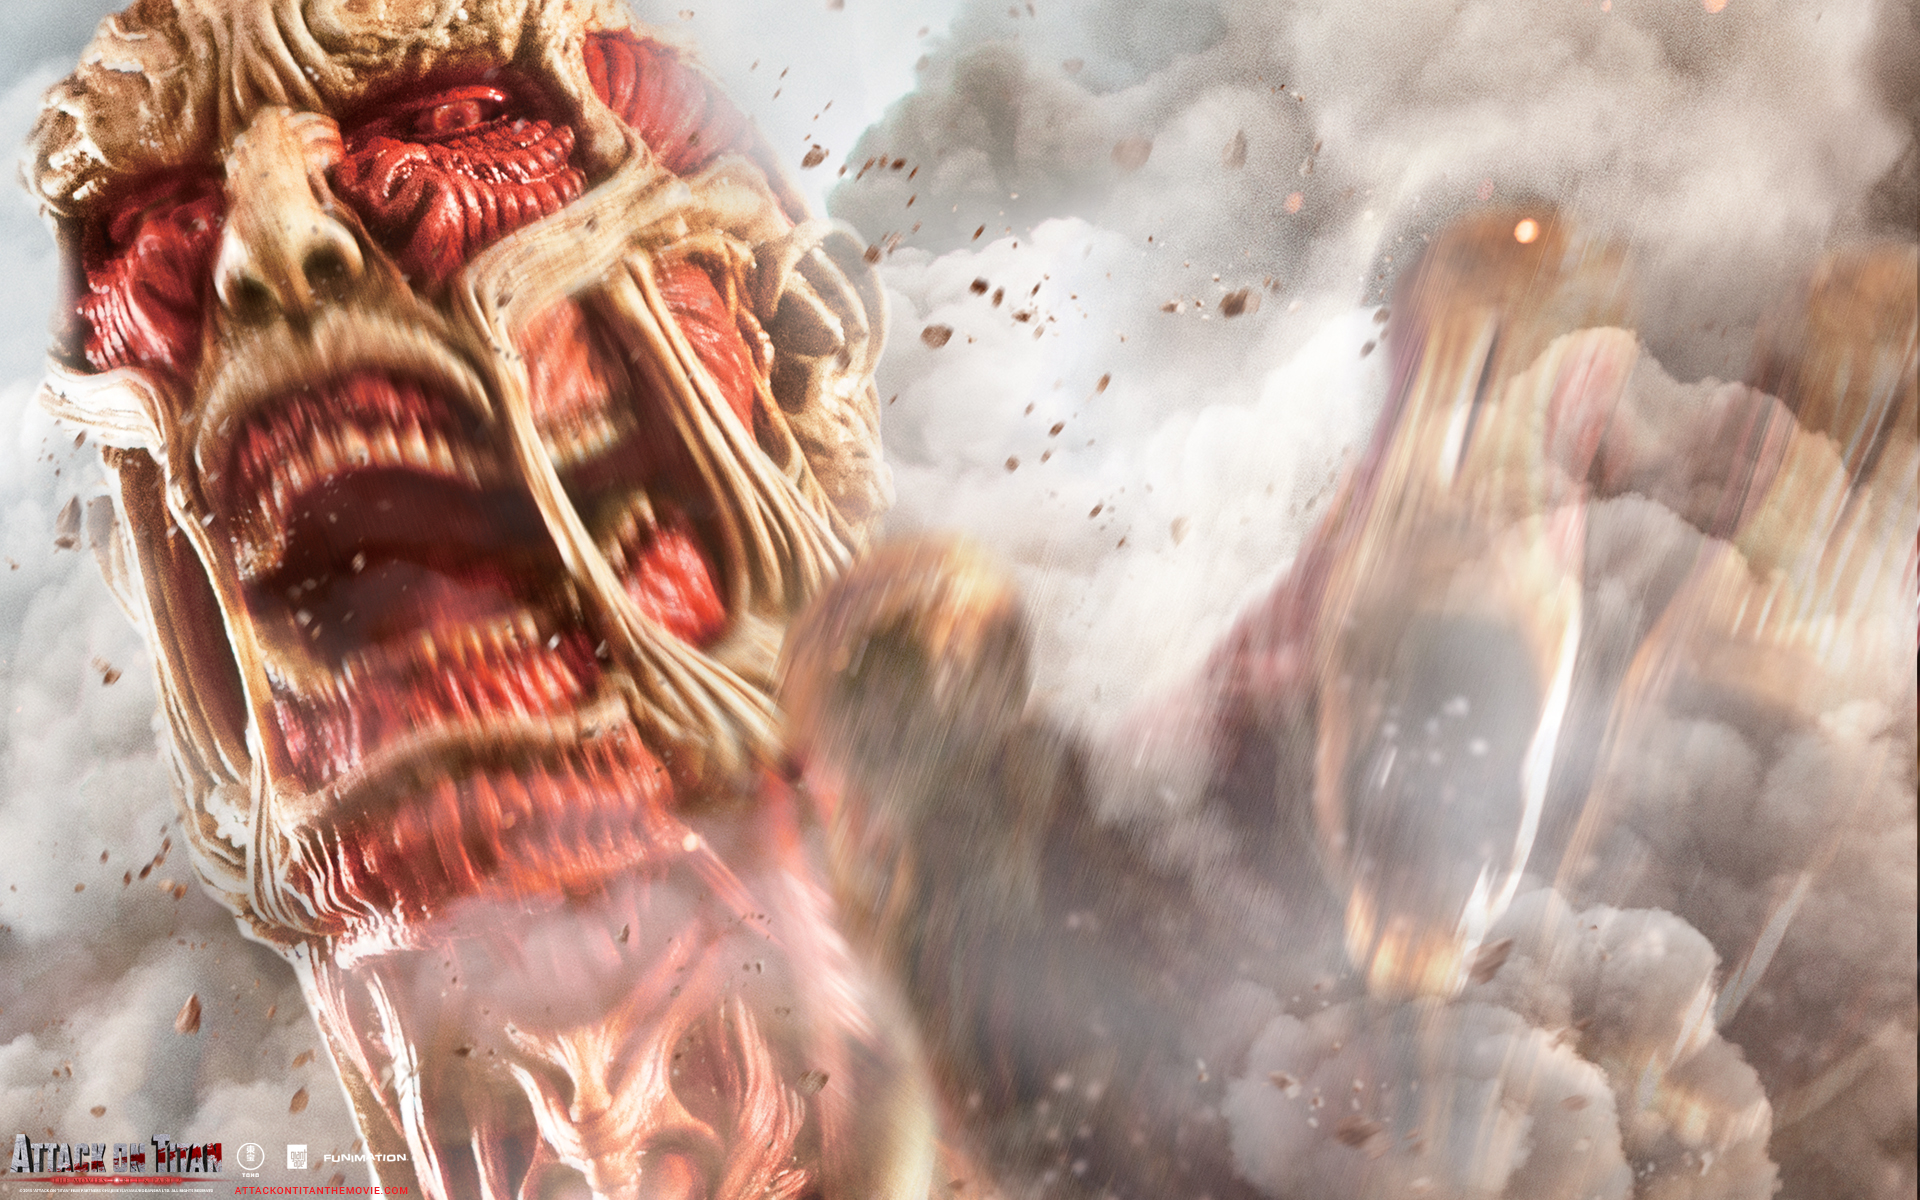 Movie Attack on Titan HD Wallpaper | Background Image